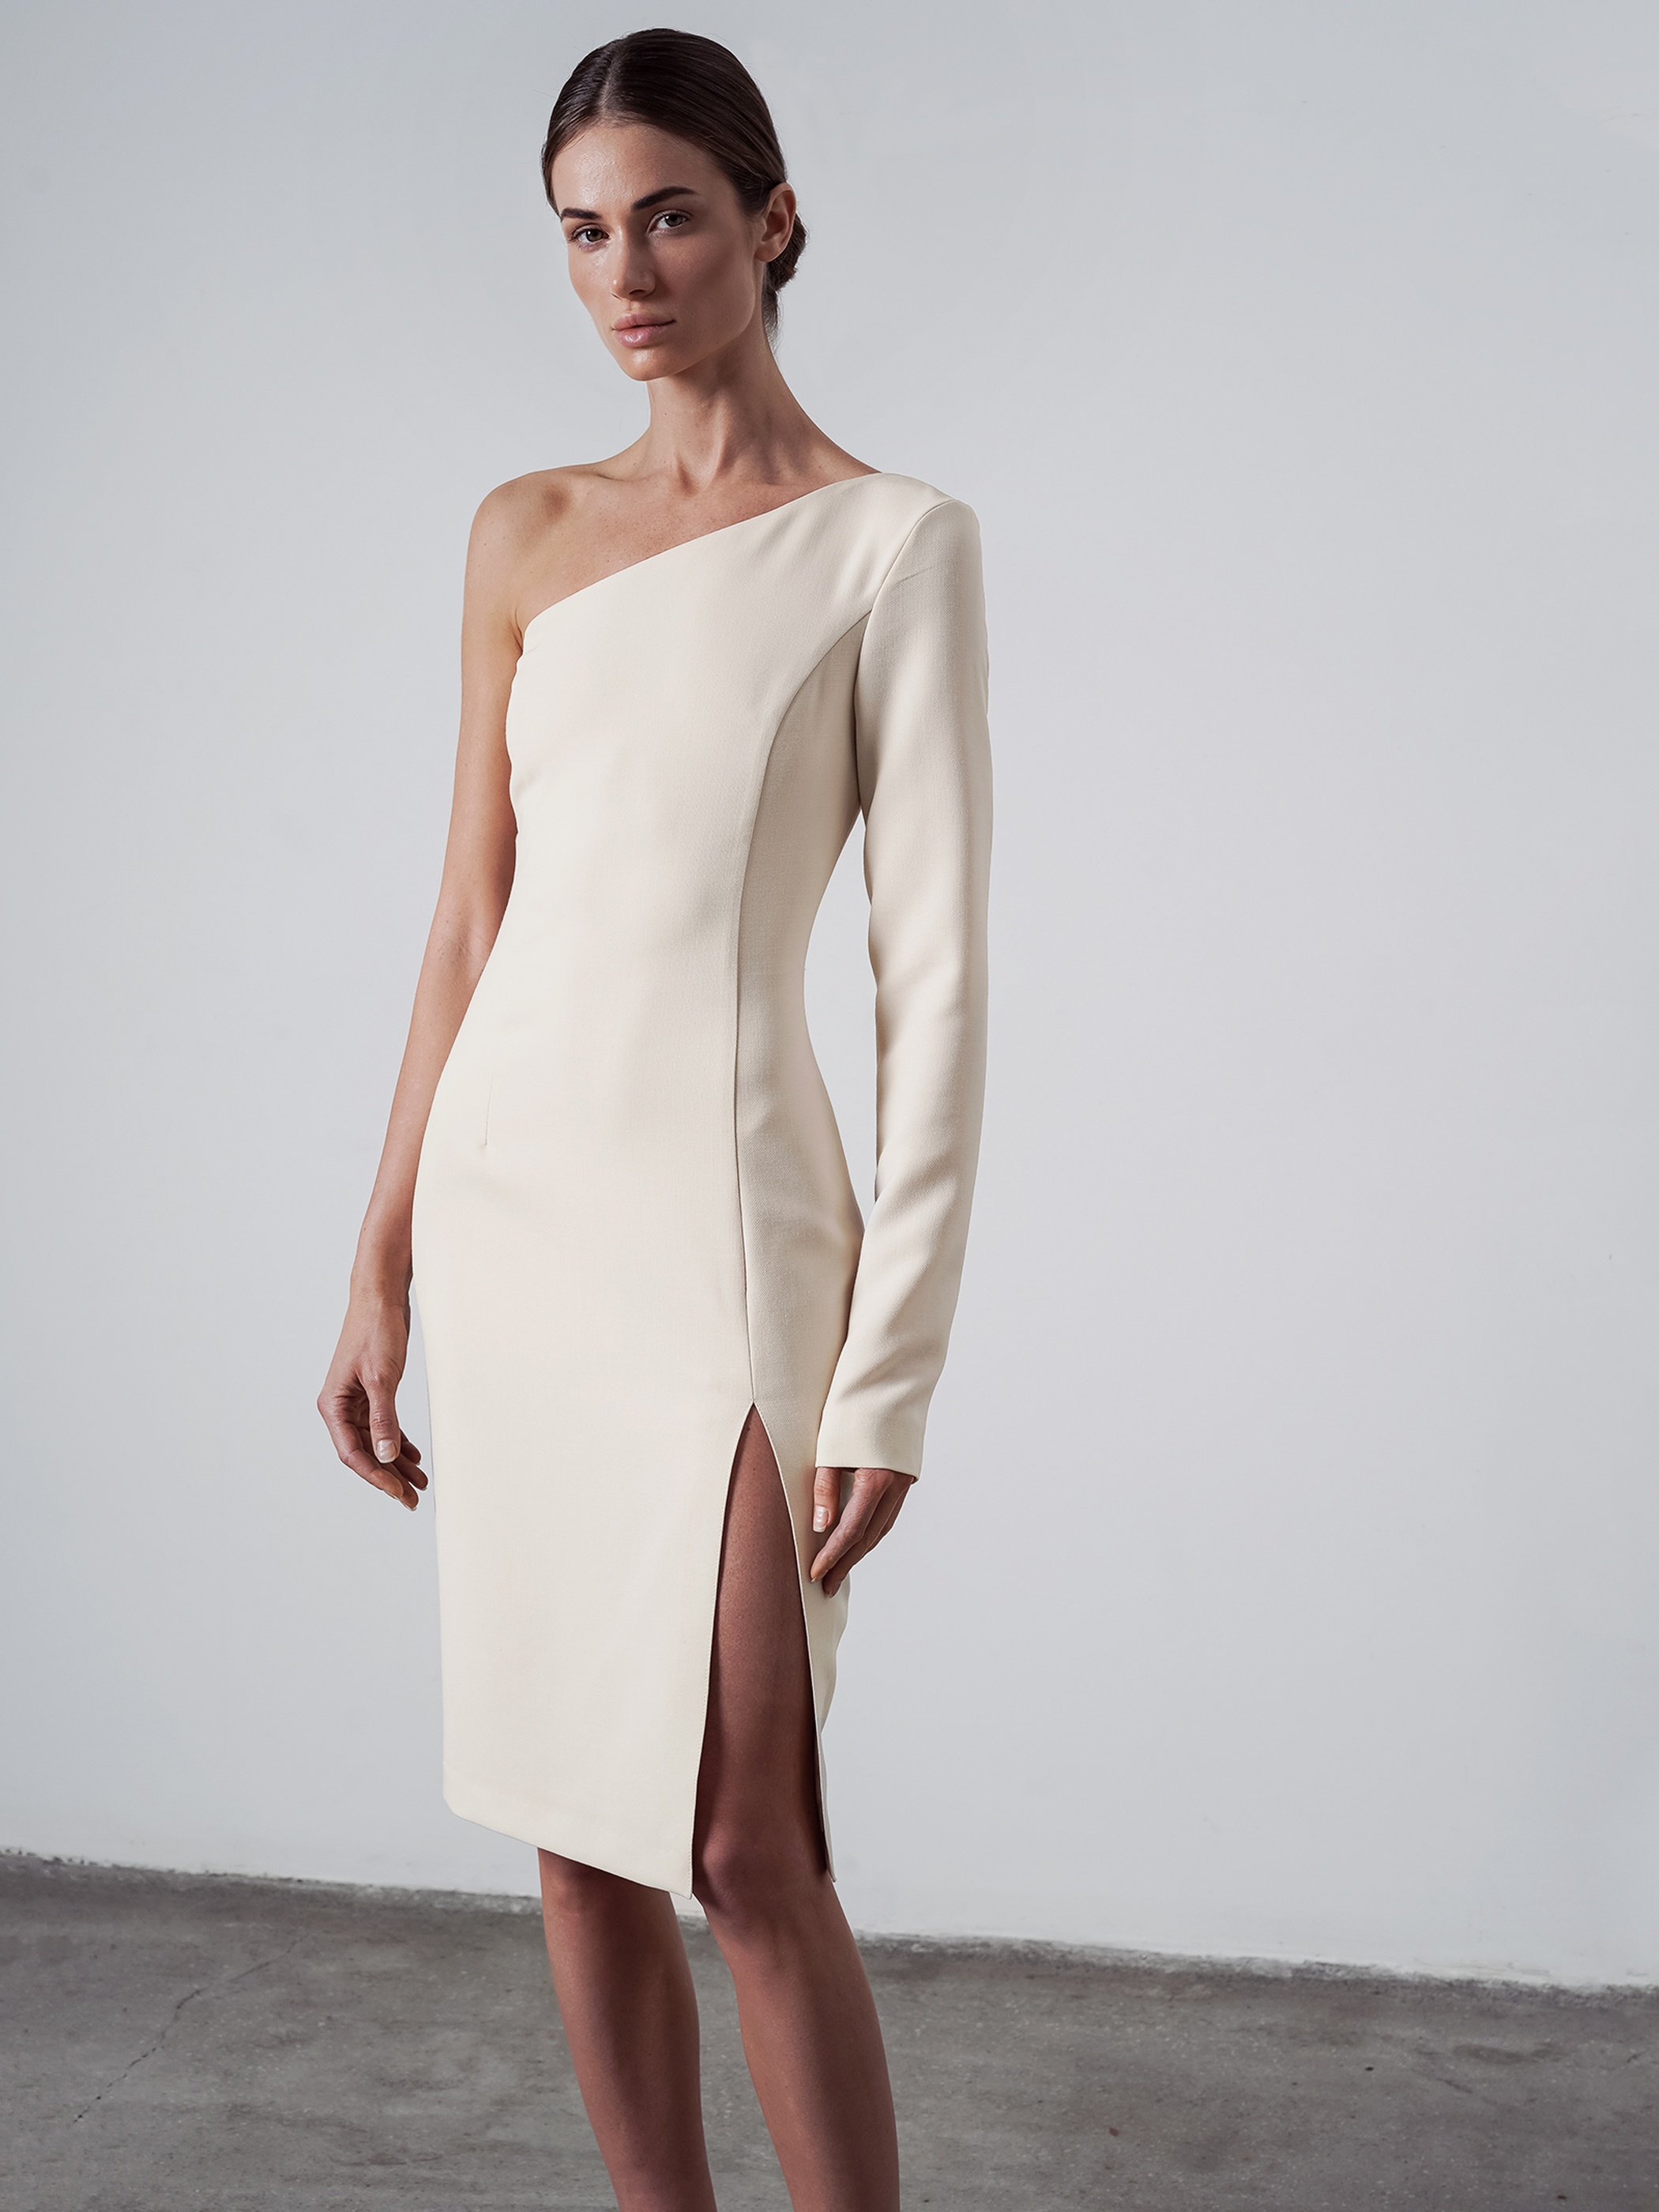 Asymmetrical midi dress - Namelazz Official Online Store